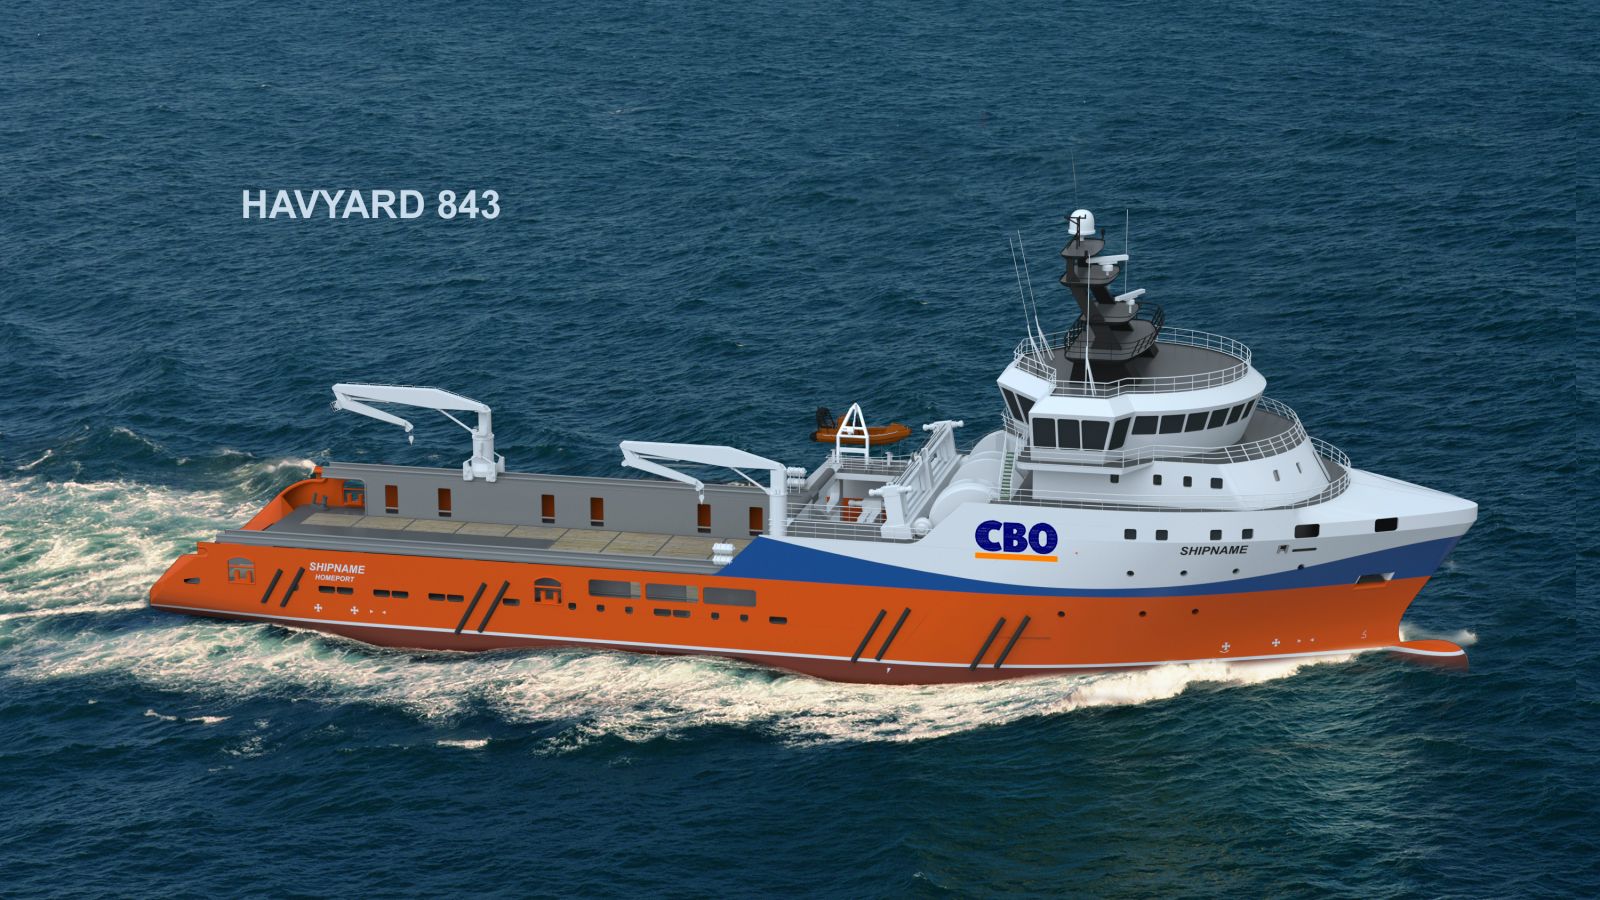 Havyard 843 AHTS vessel